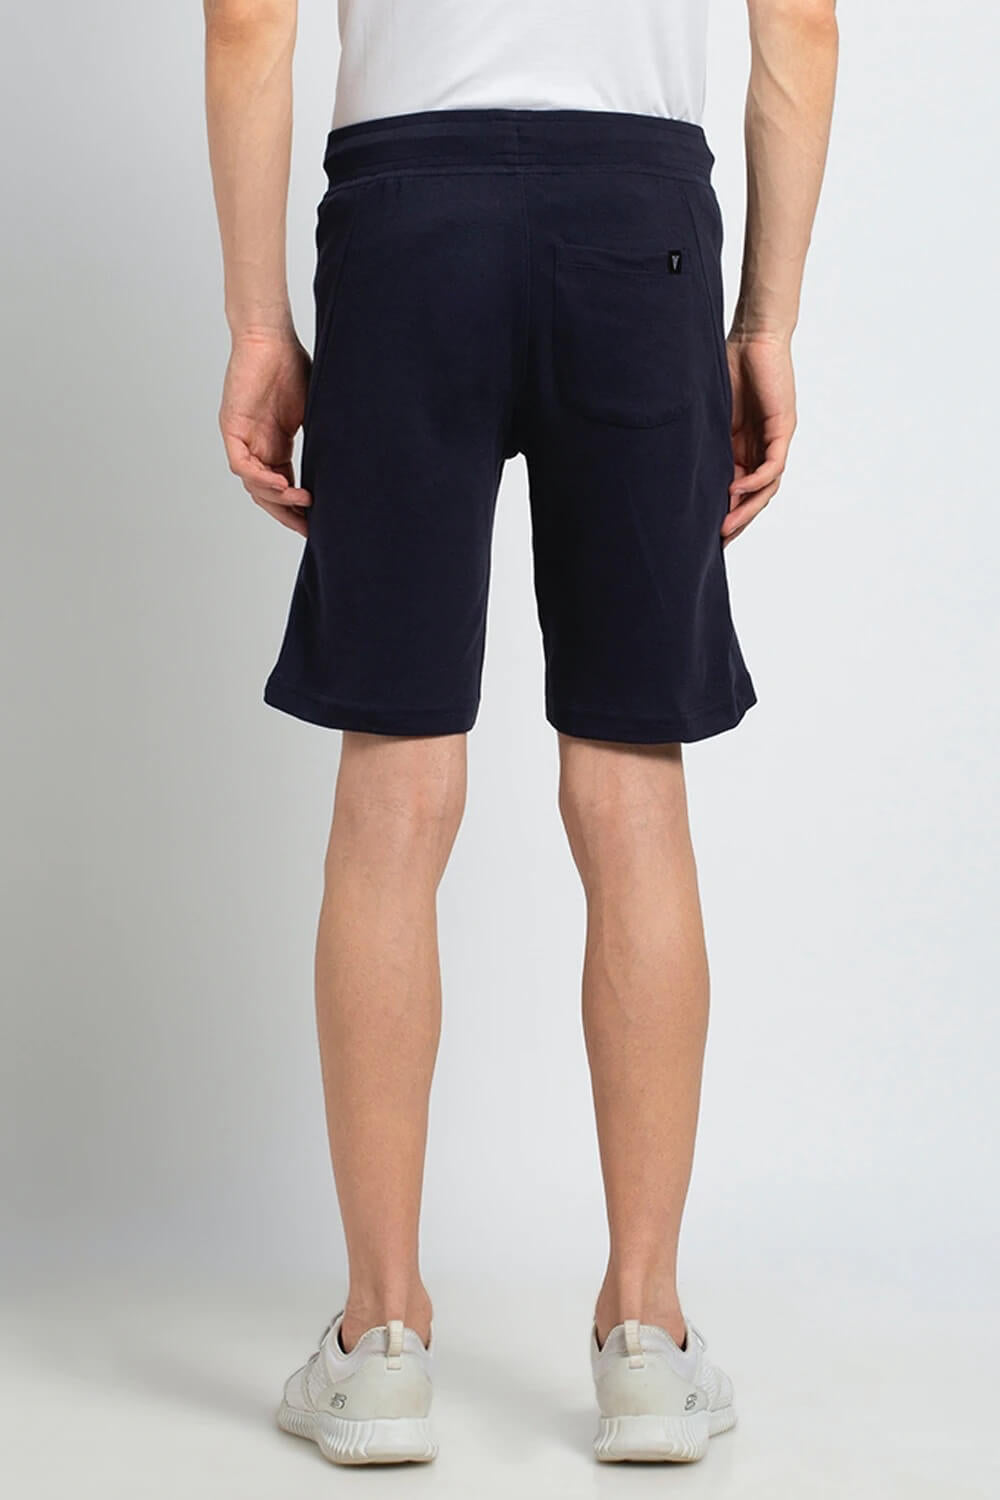 Van Heusen Navy Knit Shorts for Men #50002